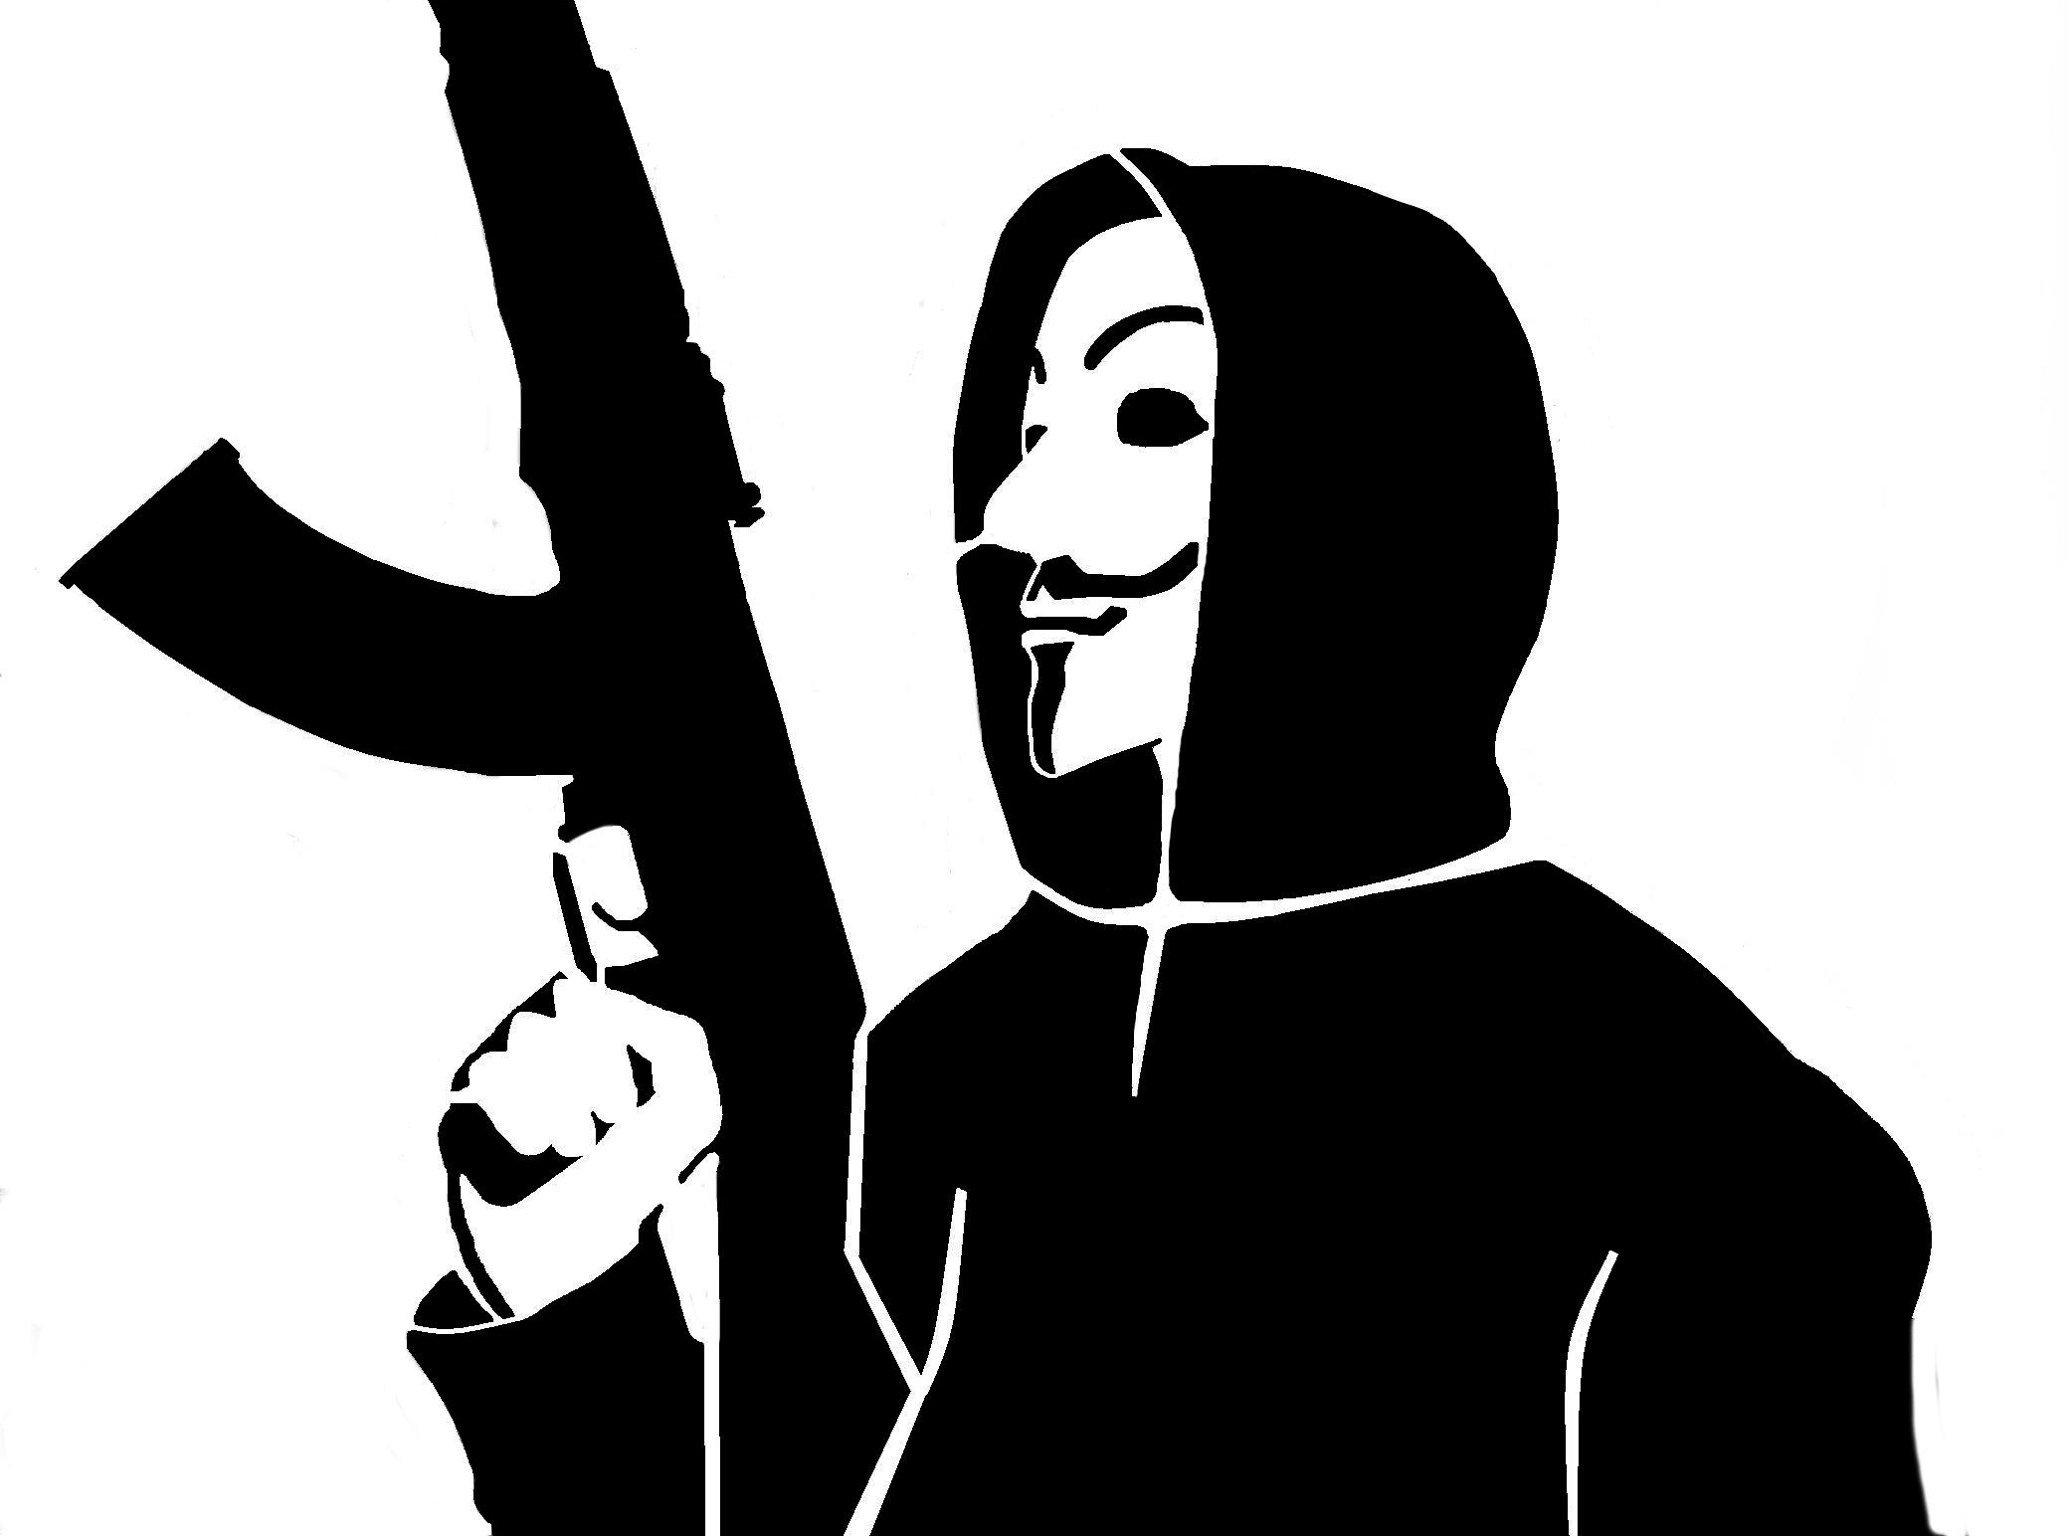 Аватарки с пистолетом. Анонимус с пистолетом. Бандит рисунок. Анонимус в маске с пистолетом. Силуэт бандита.